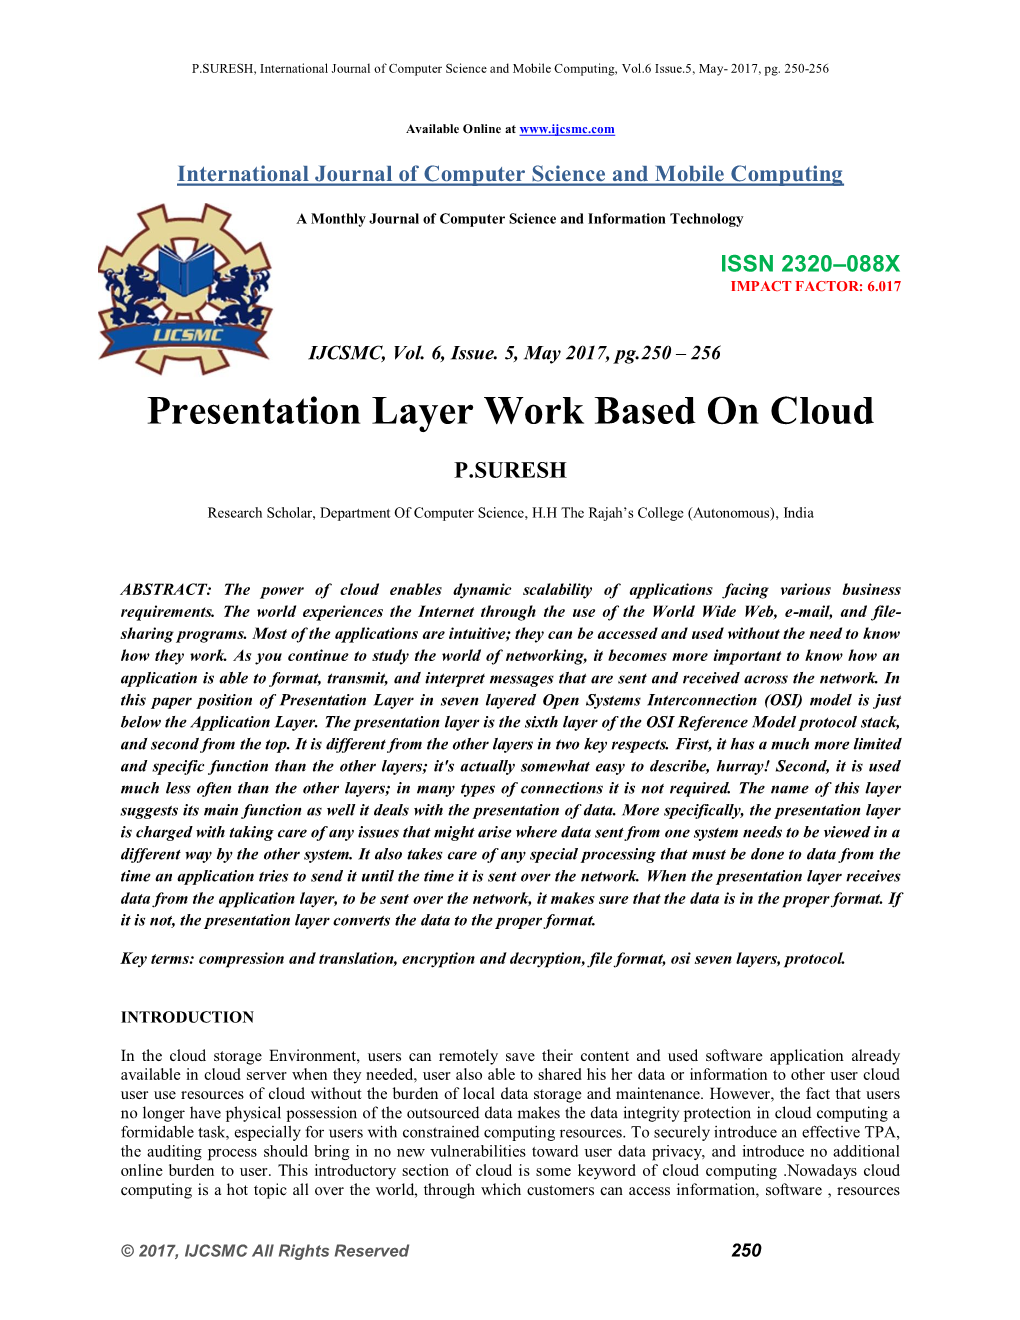 Presentation Layer Work Based on Cloud P.SURESH